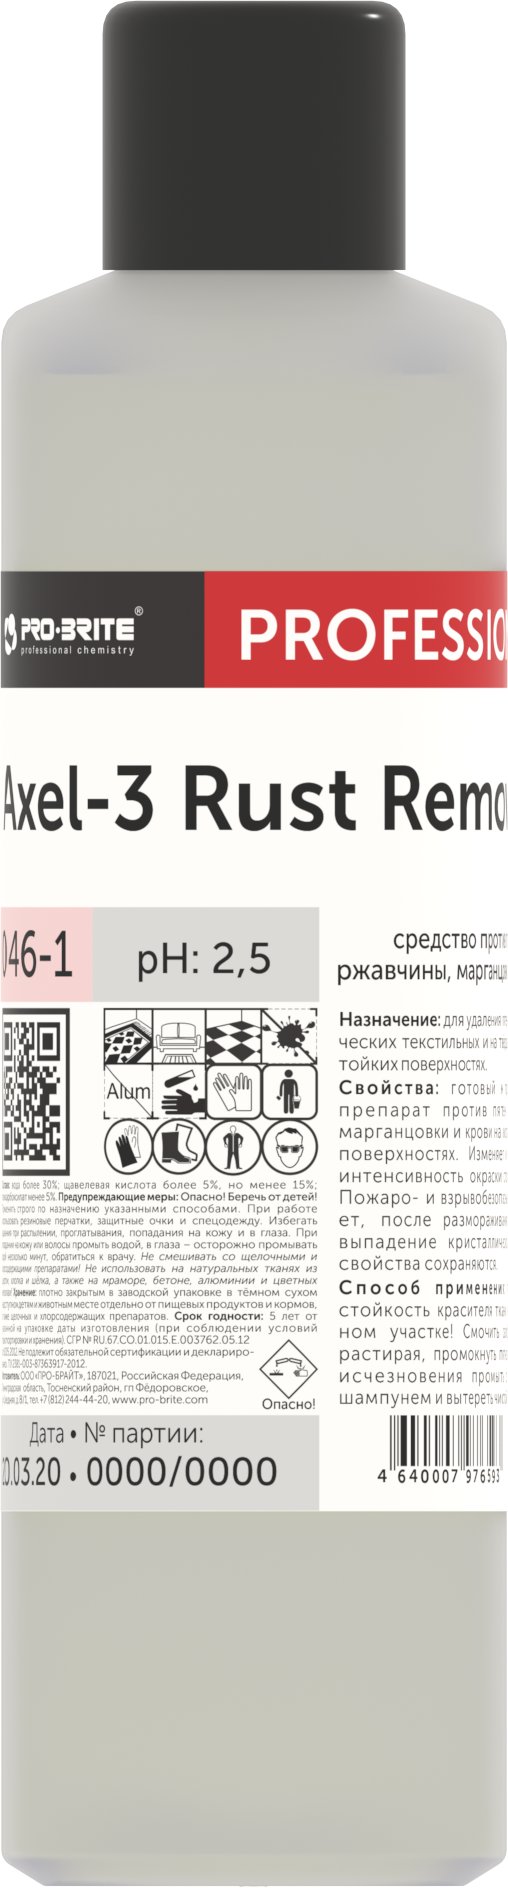 Пятновыводитель Axel-3 Rust remover Pro-Brite